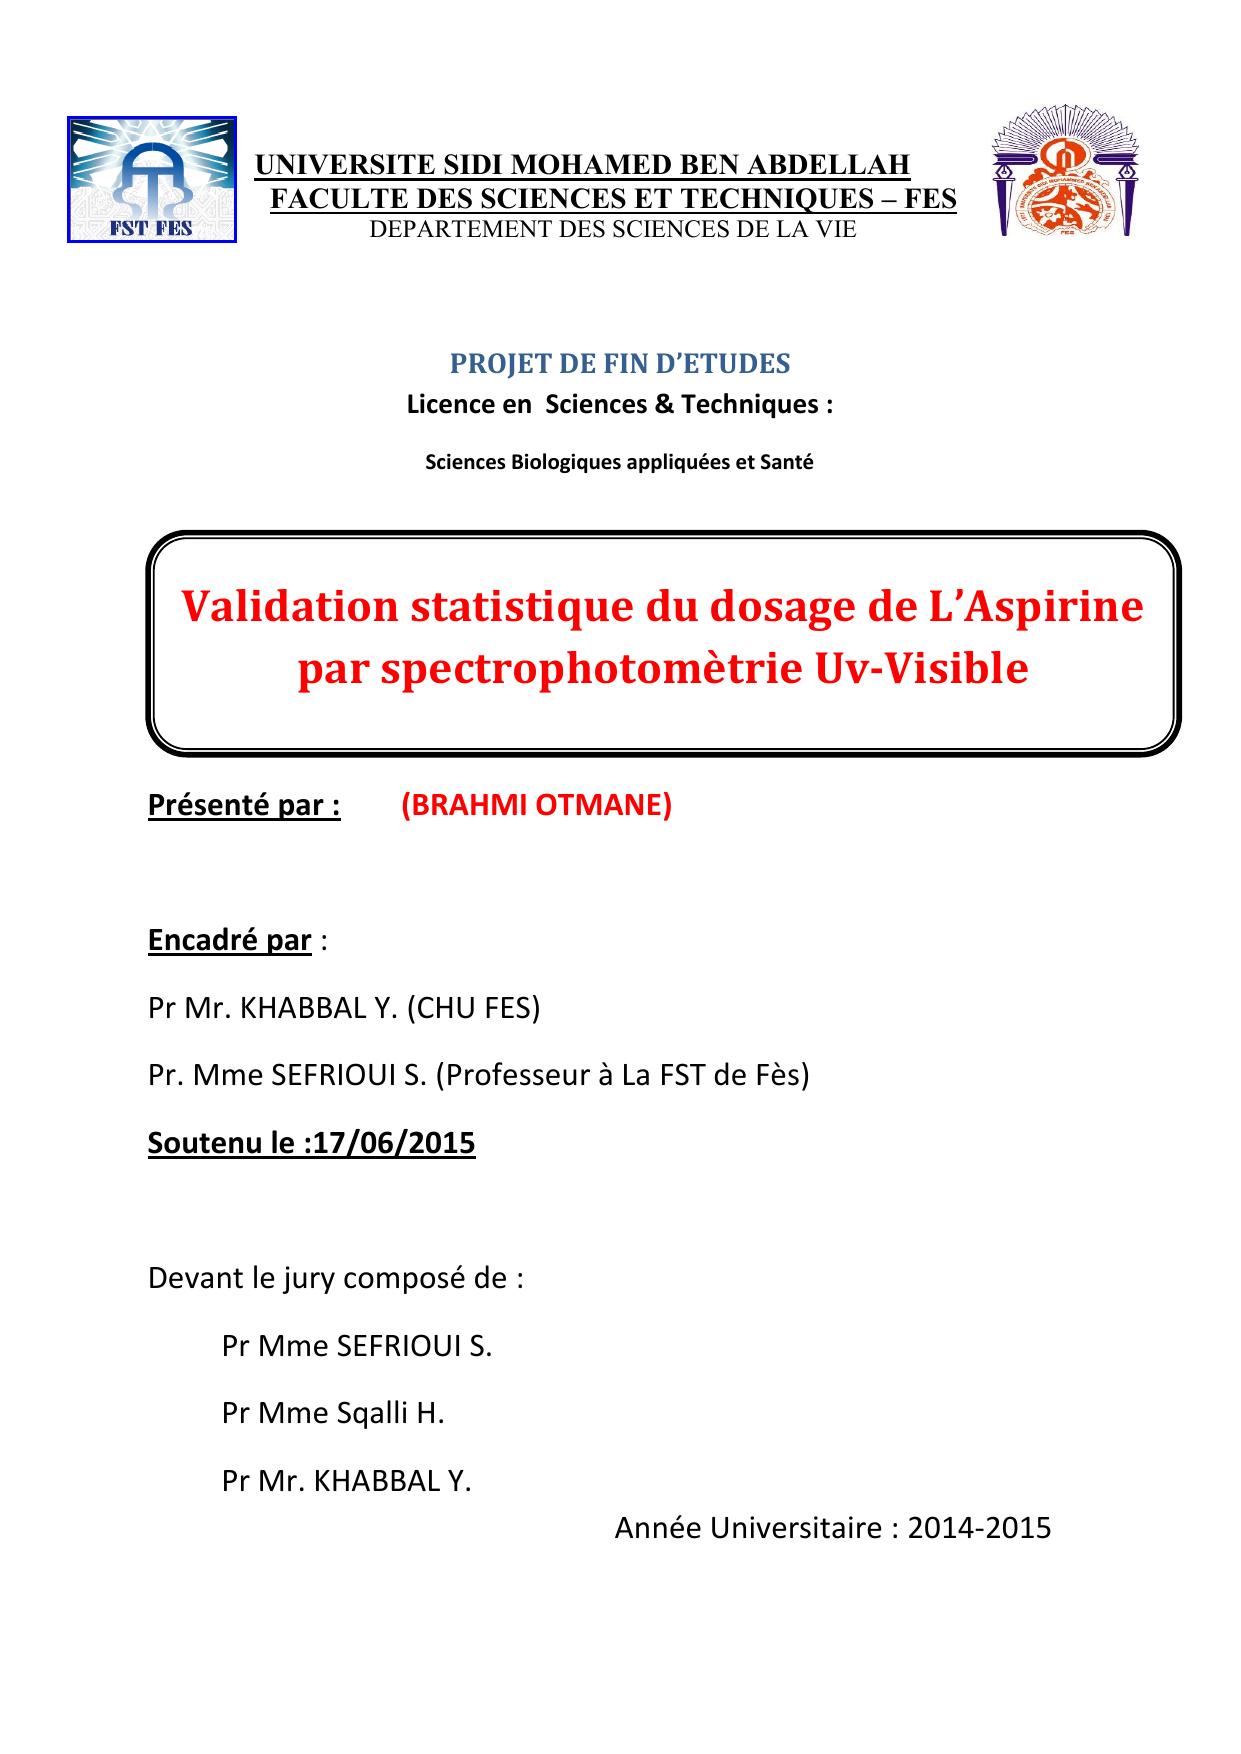 Validation statistique du dosage de L’Aspirine par spectrophotomètrie Uv-Visible